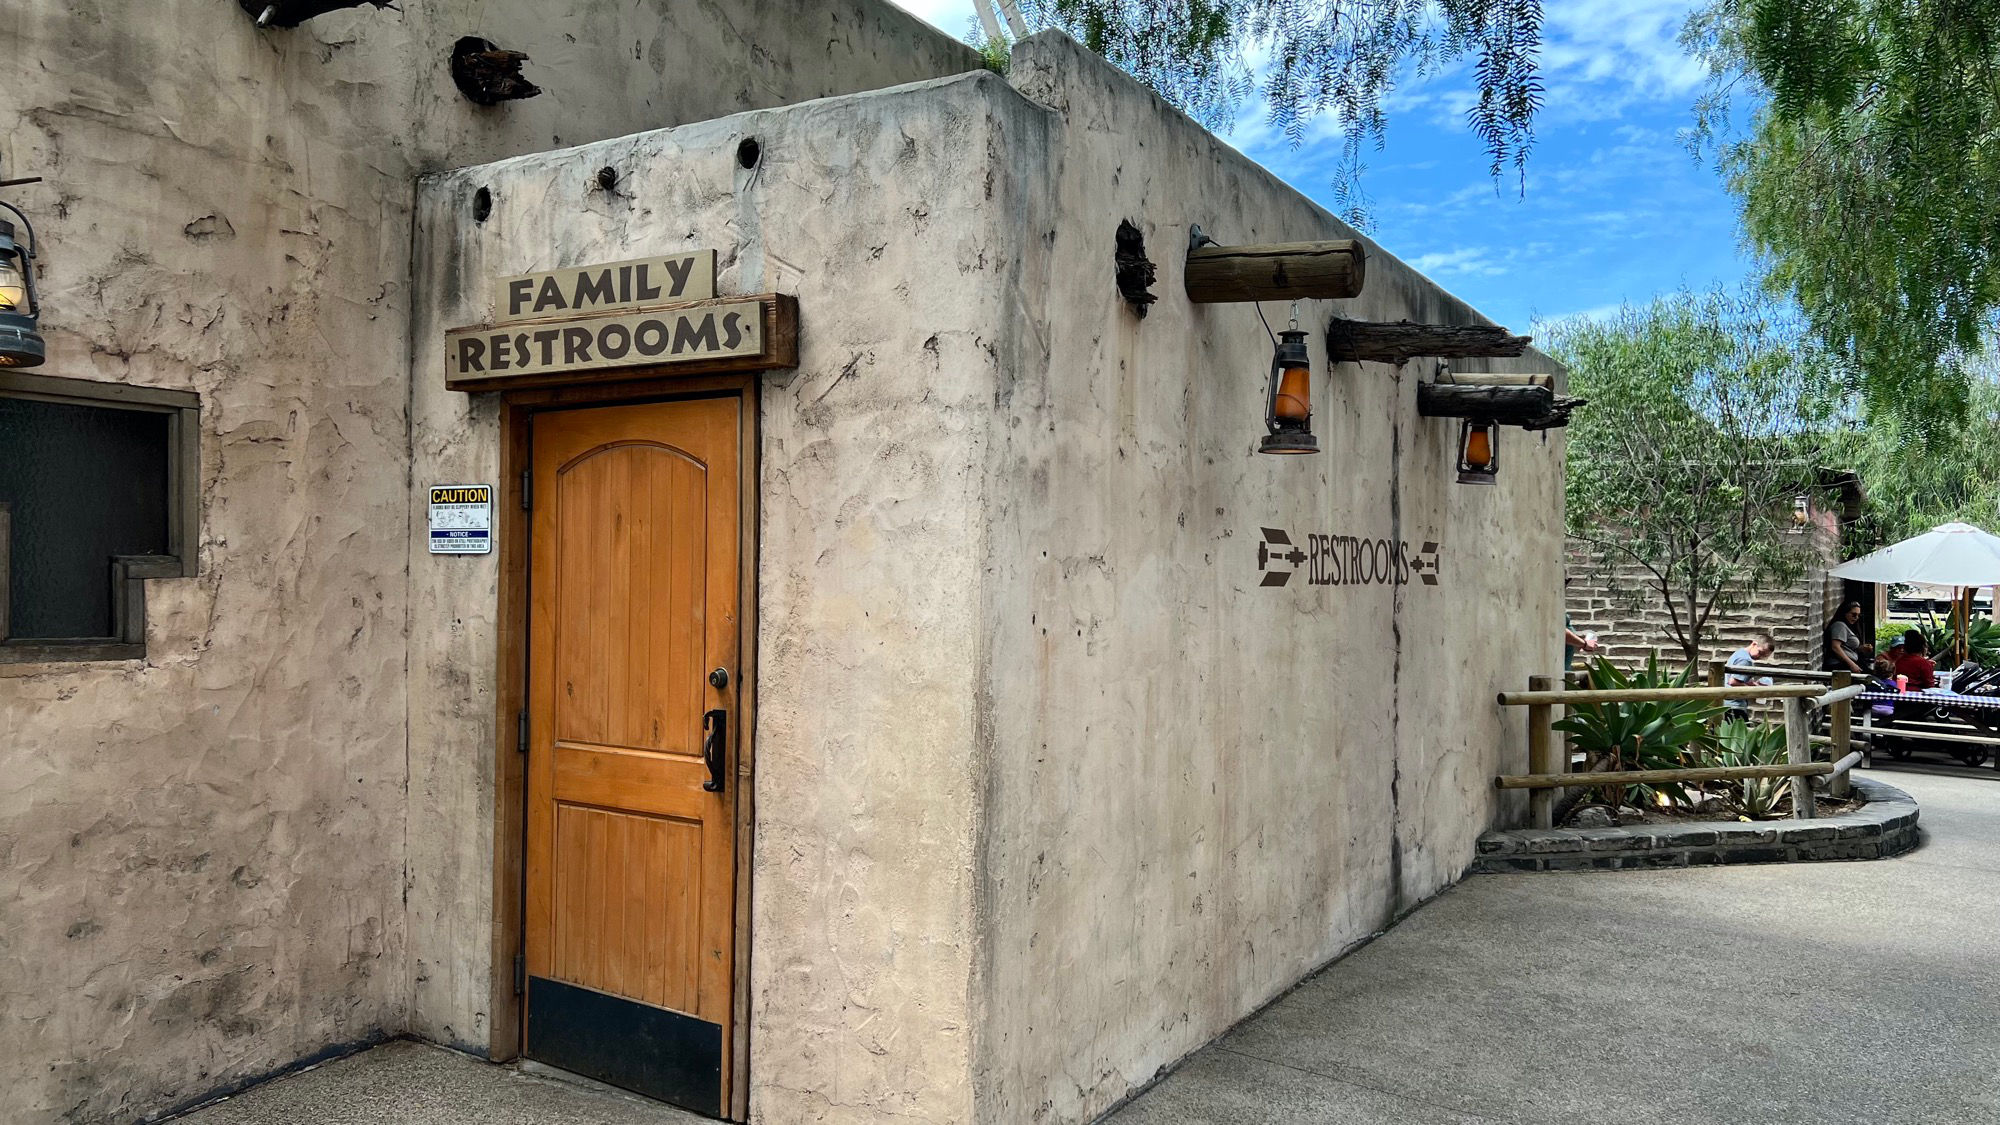 Knott's Berry Farm Family Restrooms